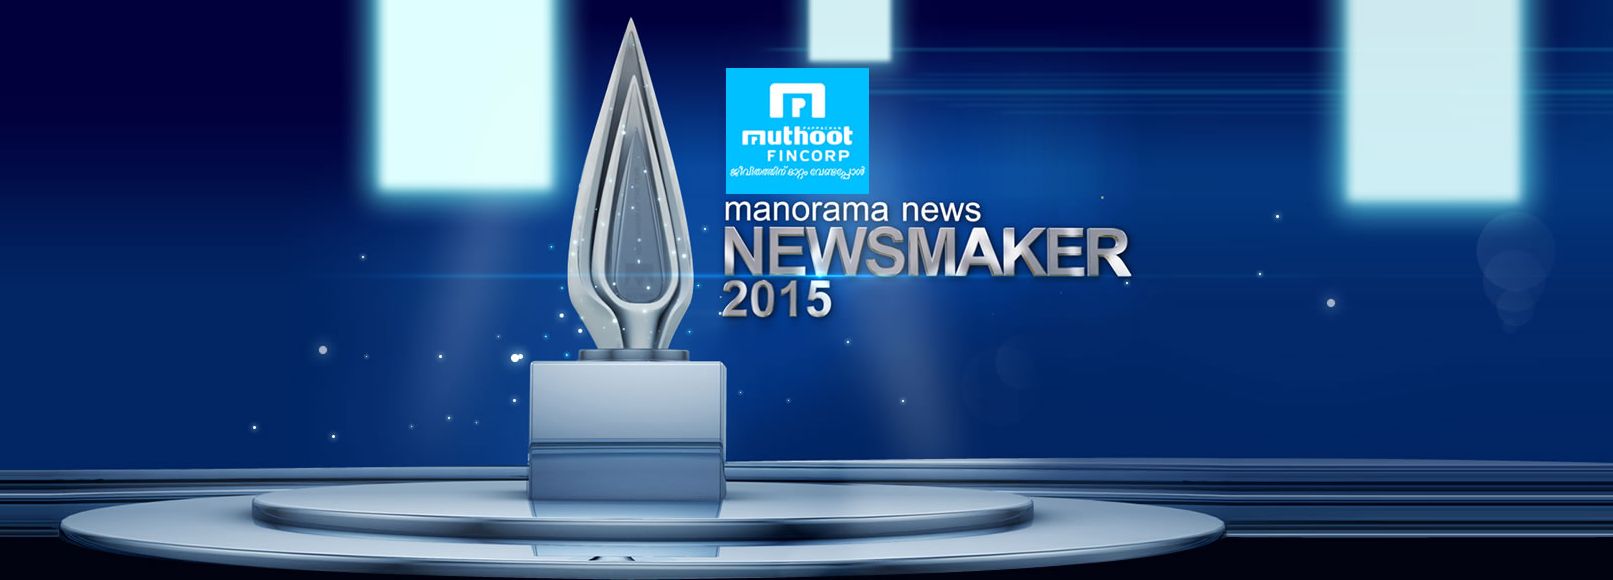 Manorama Newsmaker 2014 - Manorama News Presents Newsmaker 2014 4